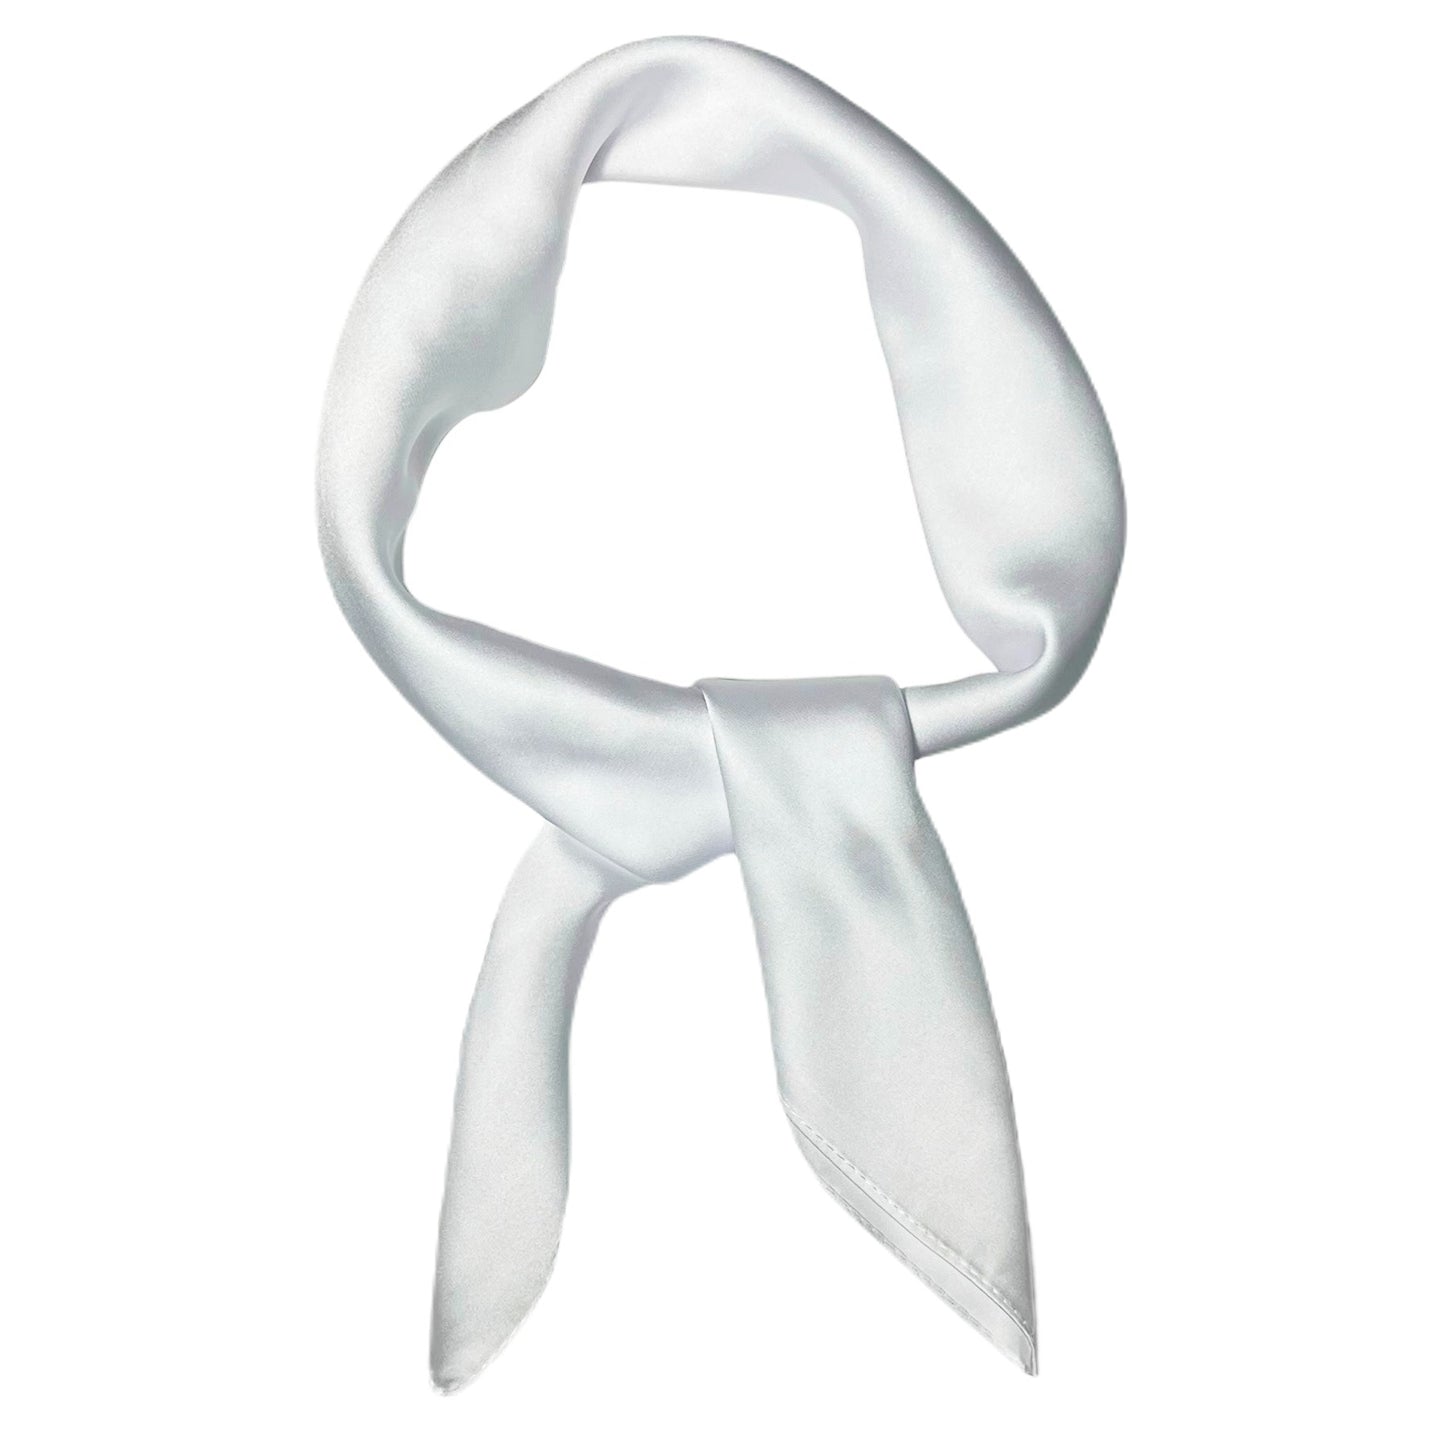 Square silk scarf 70 x 70 cm by WESTEND CHOICE Scarves & Shawls all scarves, men, silk scarves, square silk scarf, women